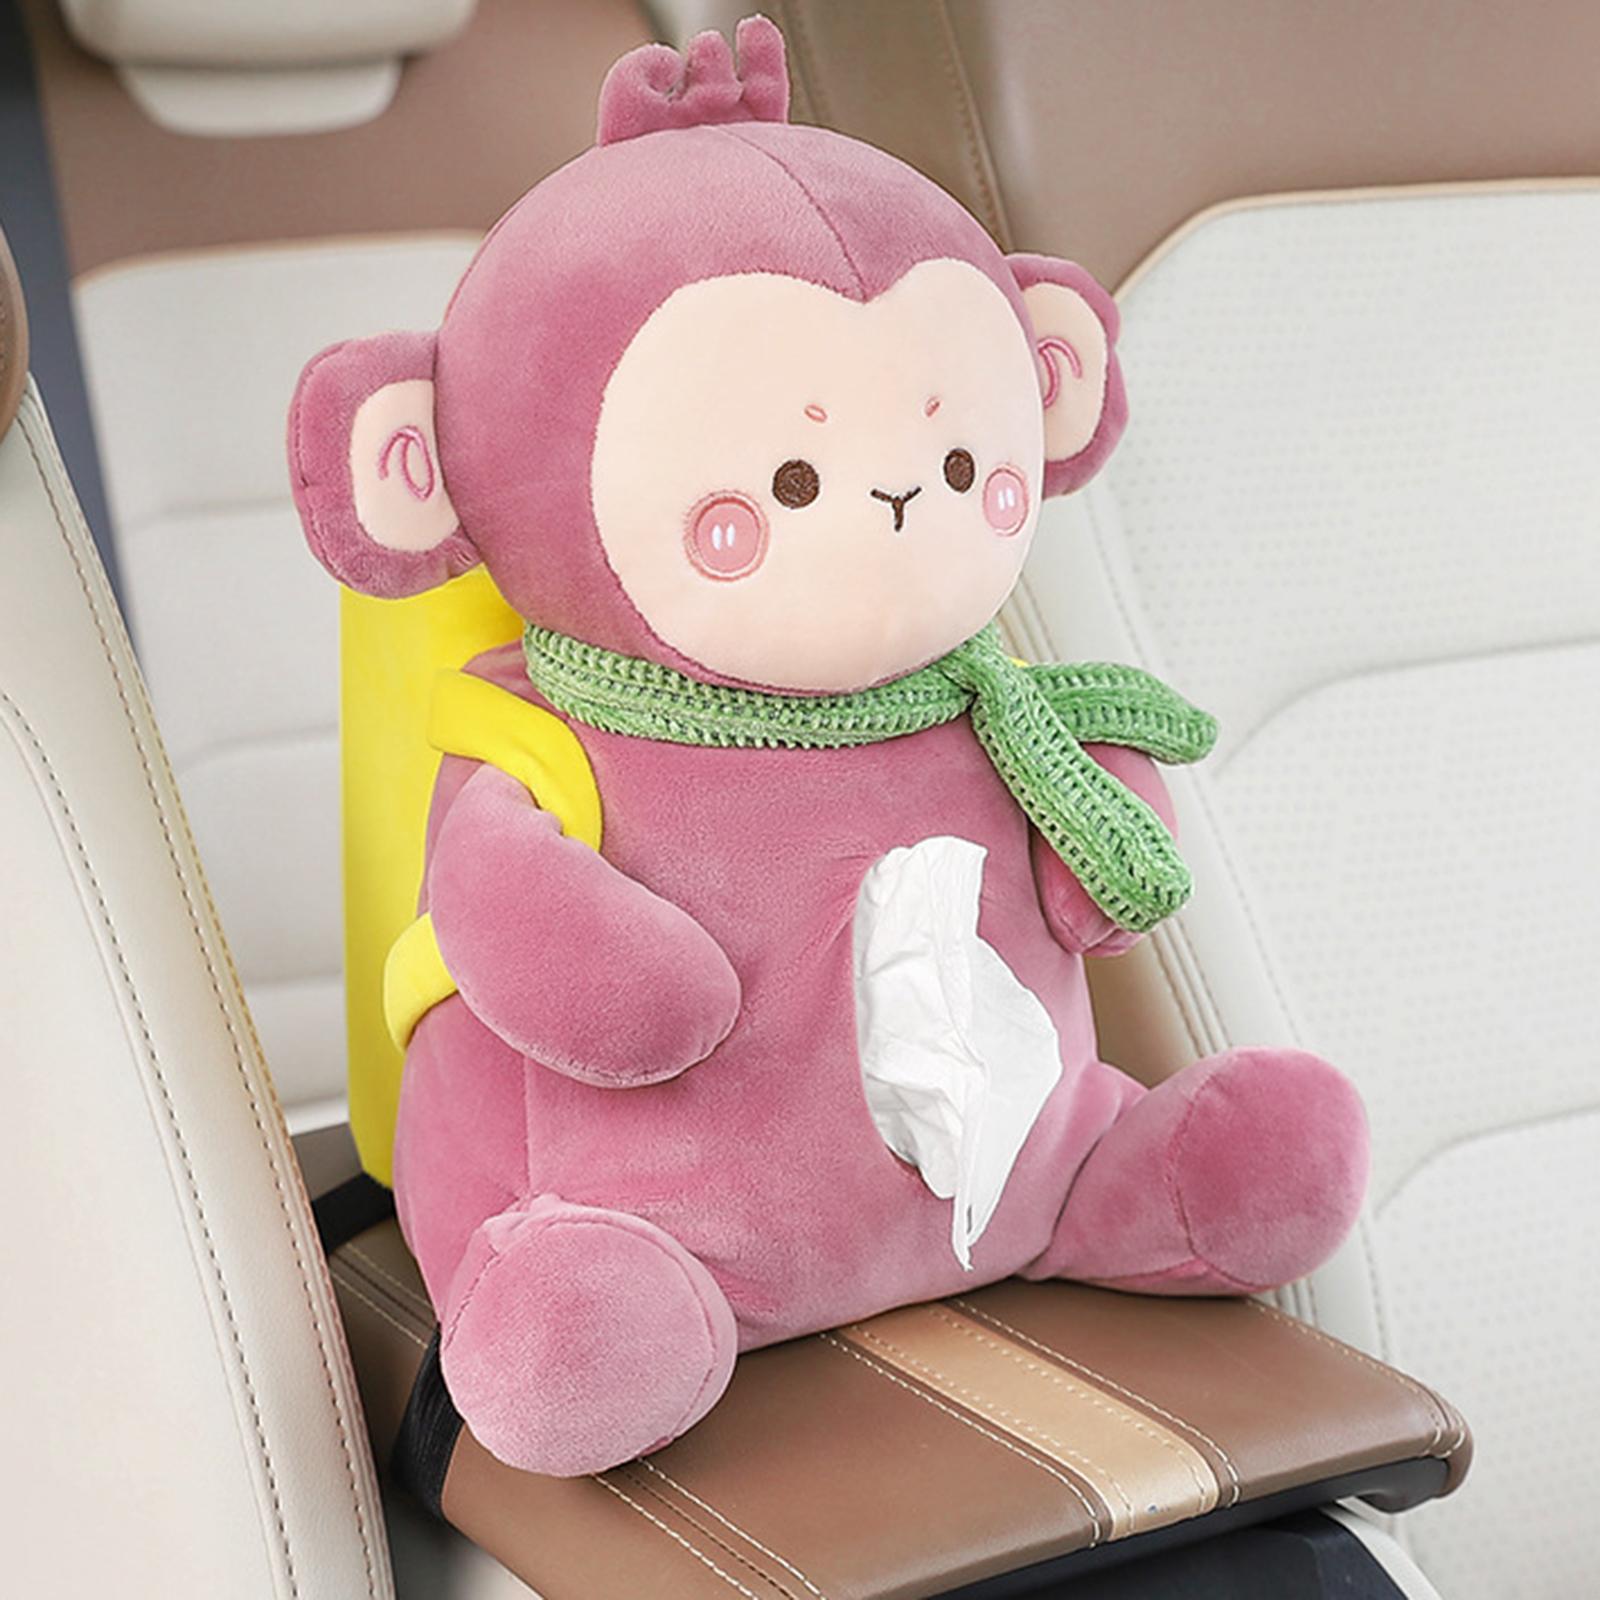 Car Cartoon Tissue Box Holder with Car Garbage Can Cute Plush Tissue Holder monkey